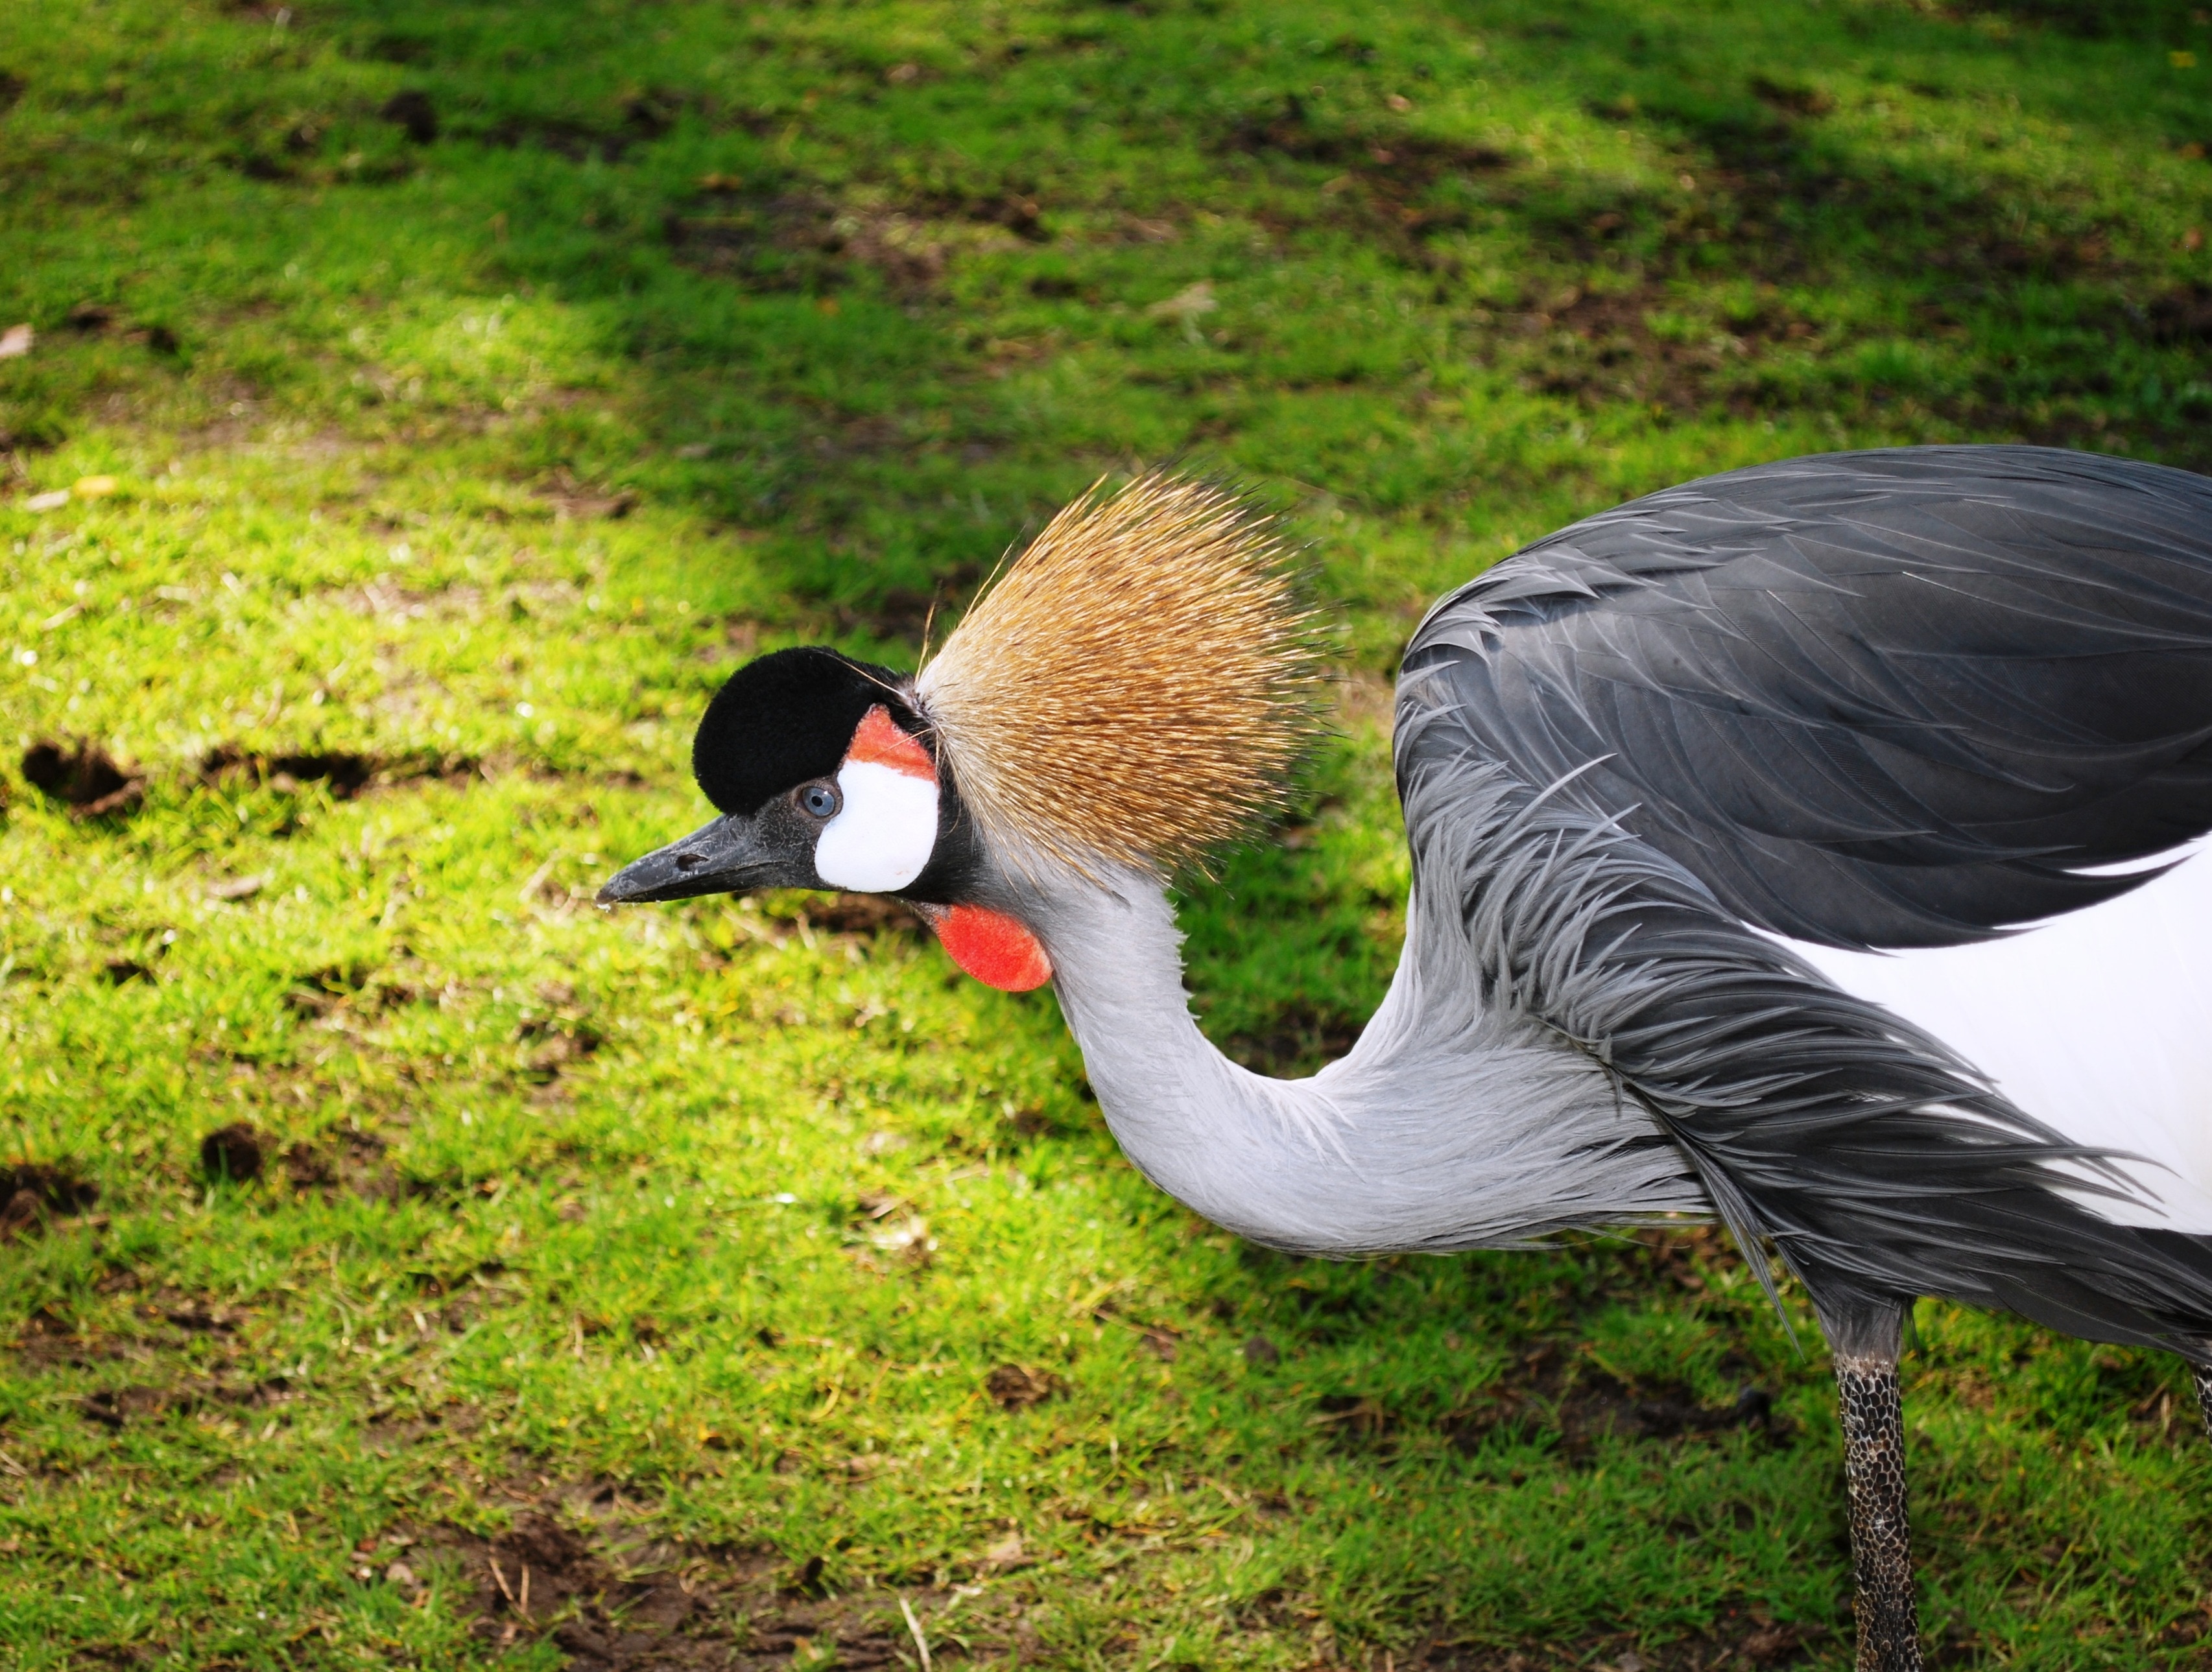 Grey Crowned Crane, Crane, bird, animals in the wild